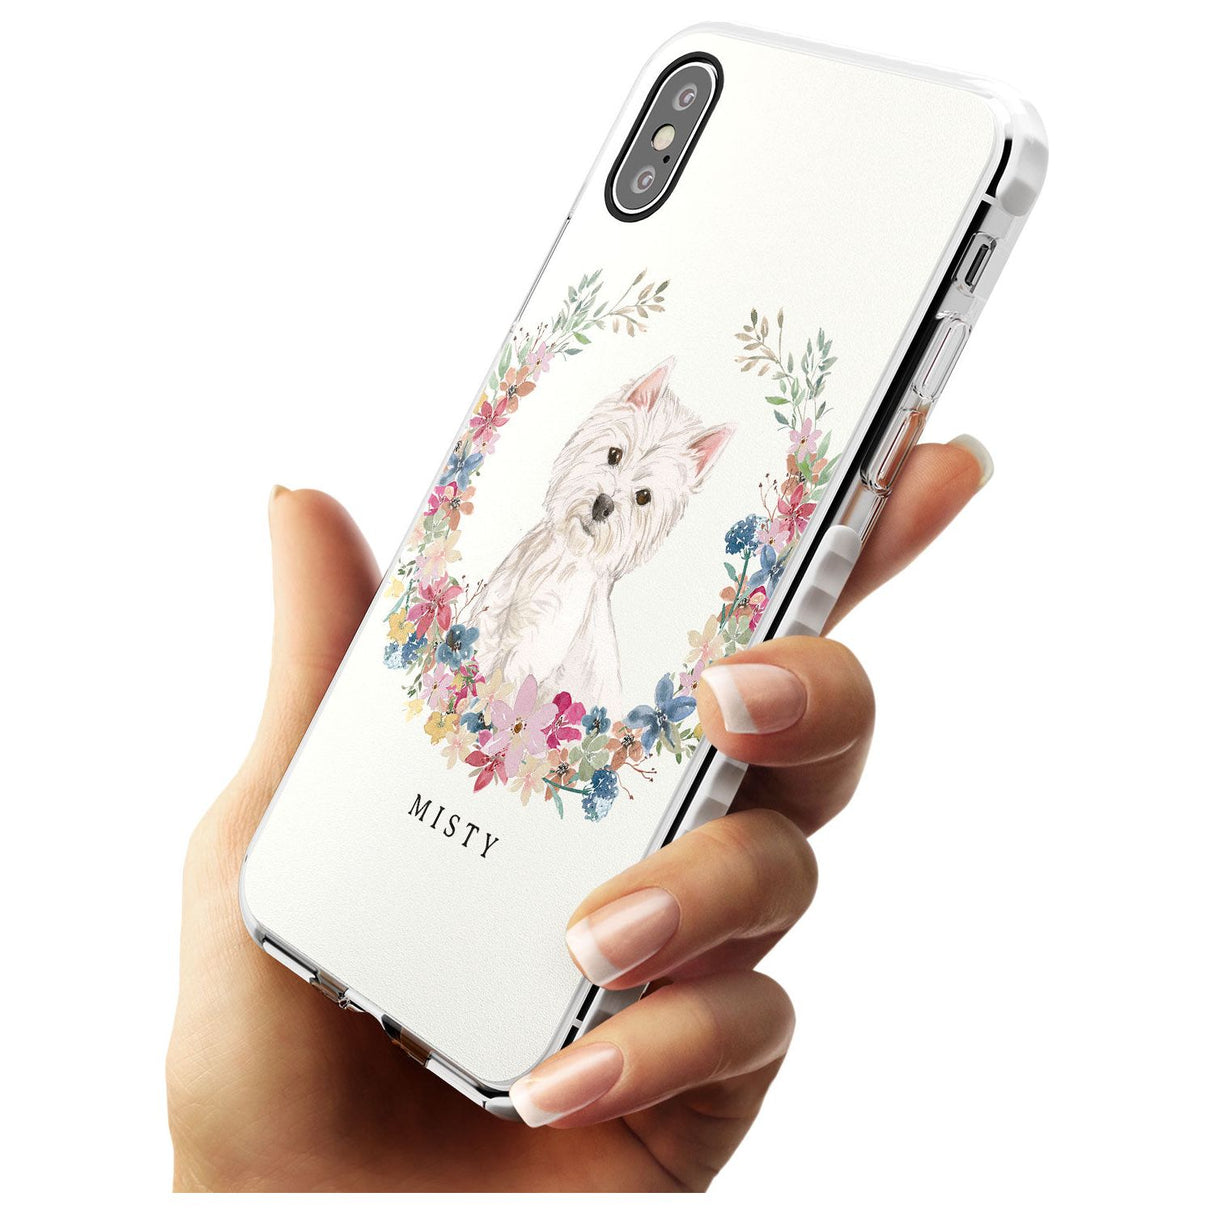 Westie Watercolour Dog Portrait Impact Phone Case for iPhone X XS Max XR